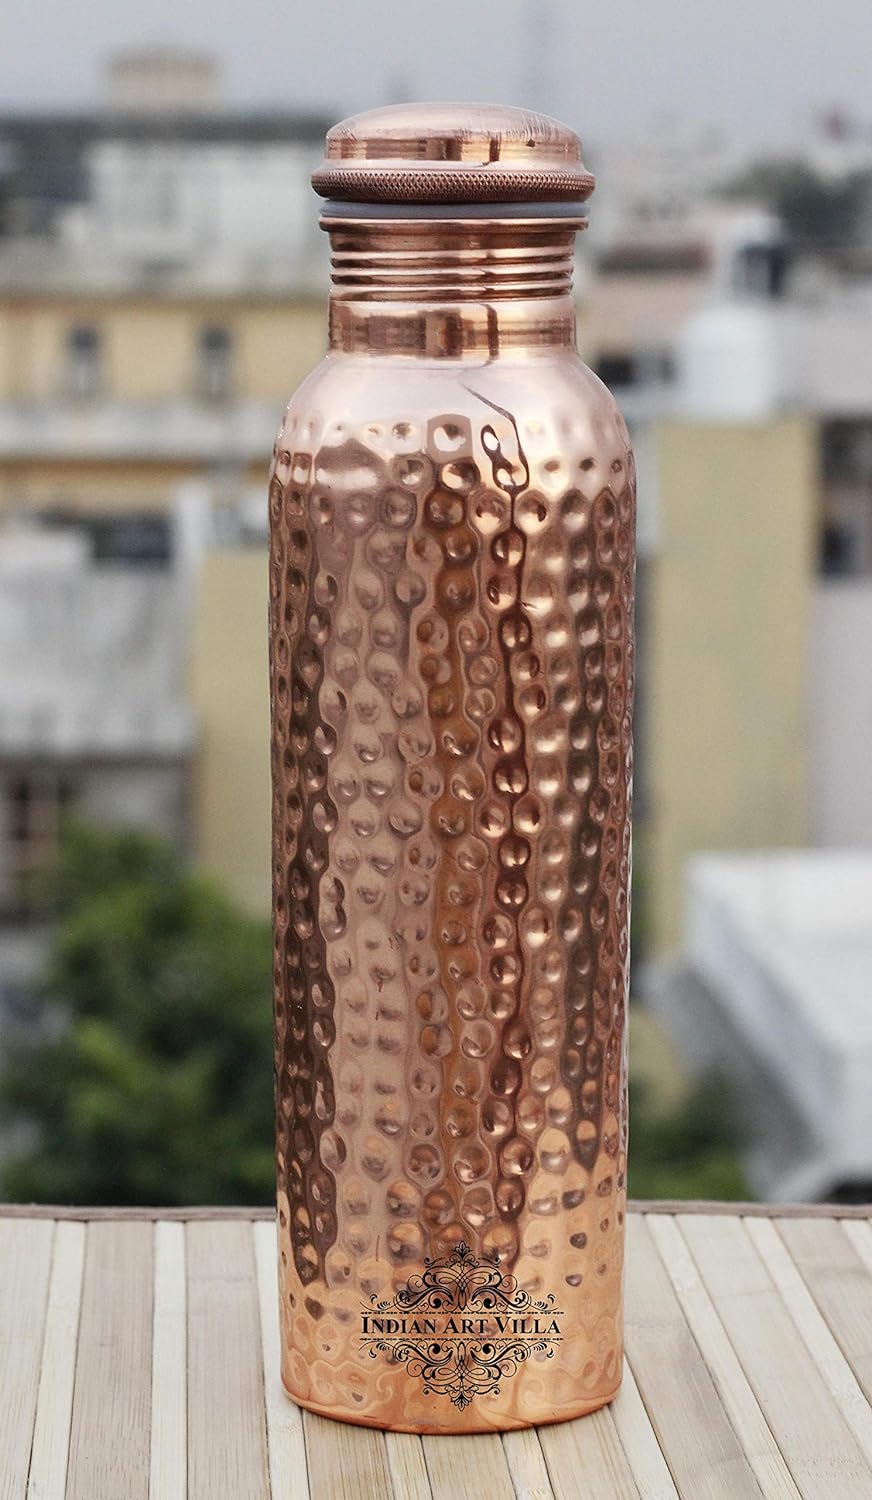 Hammered copper water bottle 1 litre copper water bottle with hammered design